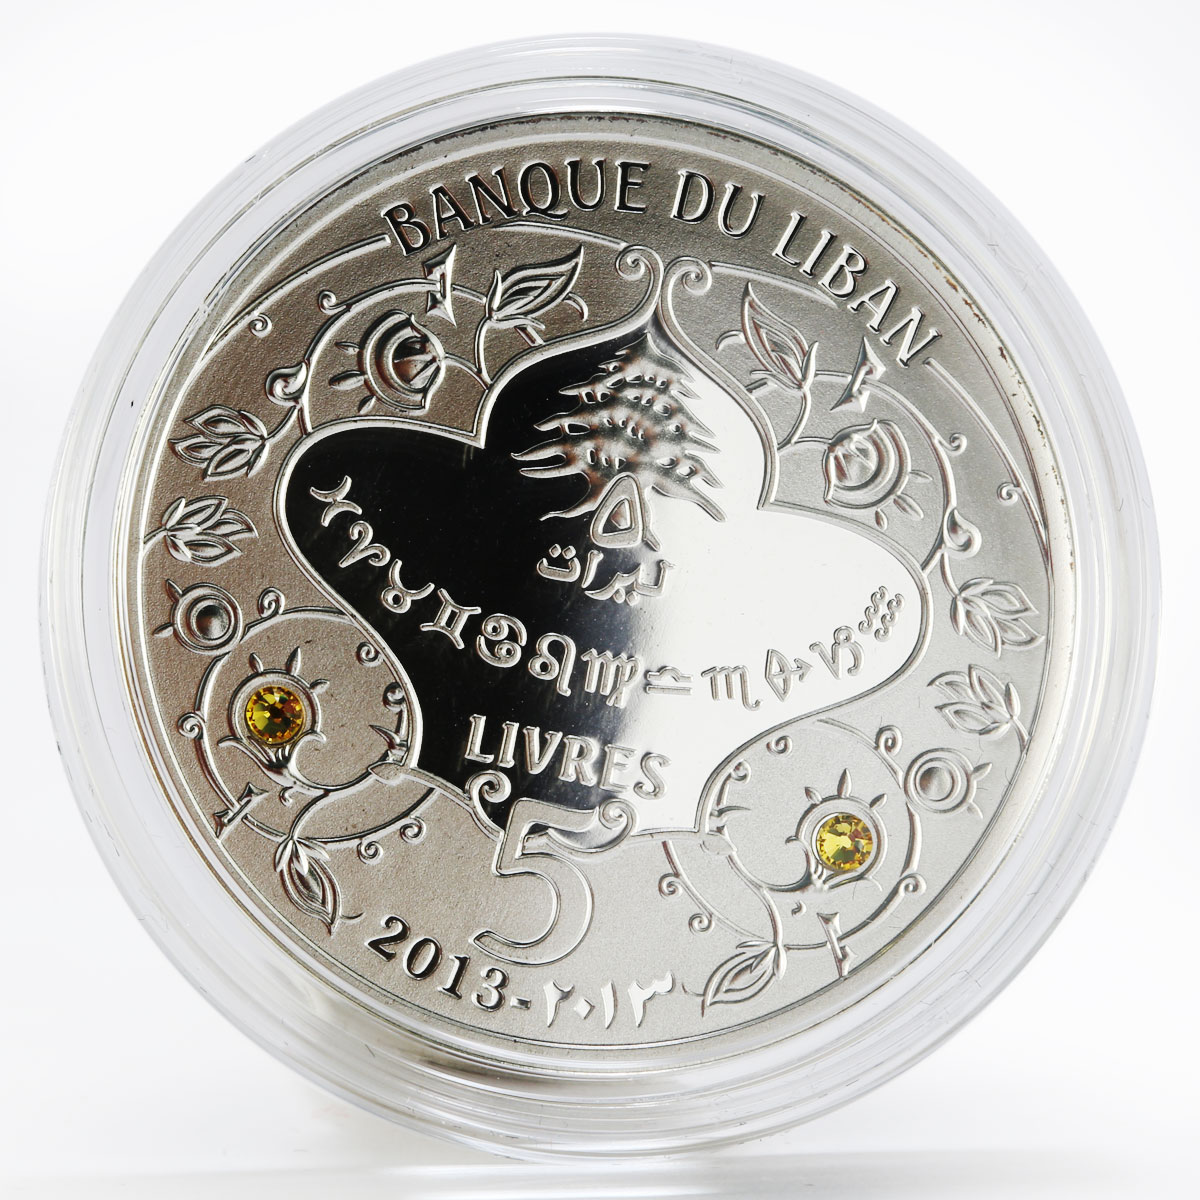 Lebanon 5 livres Zodiac Signs Virgo colored proof silver coin 2013